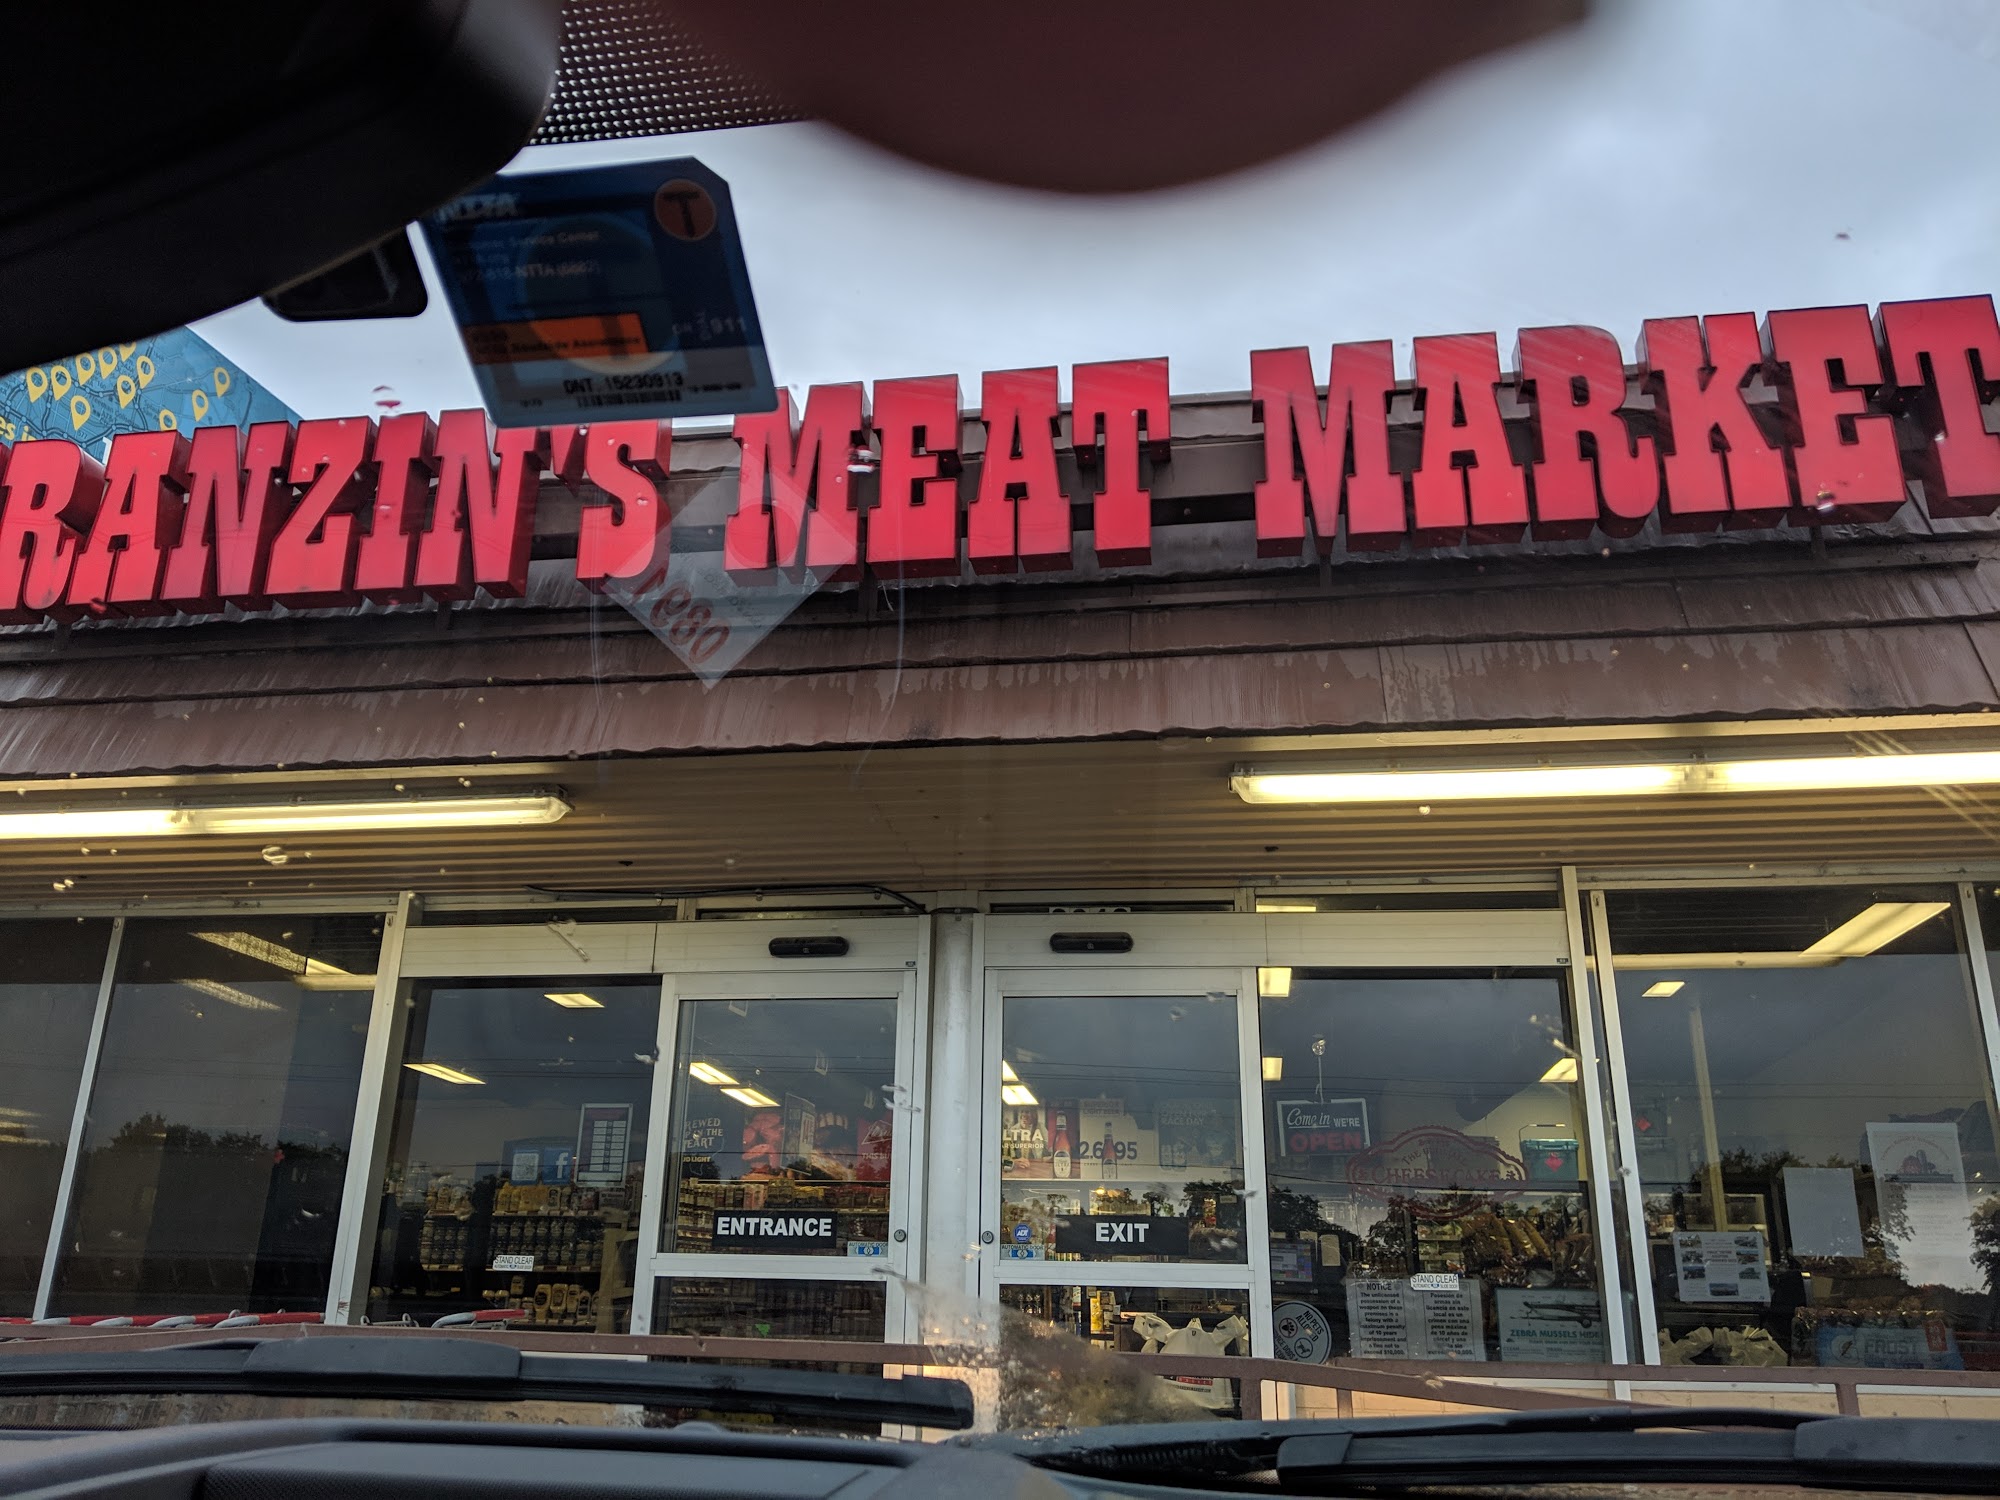 Granzin's Meat Market